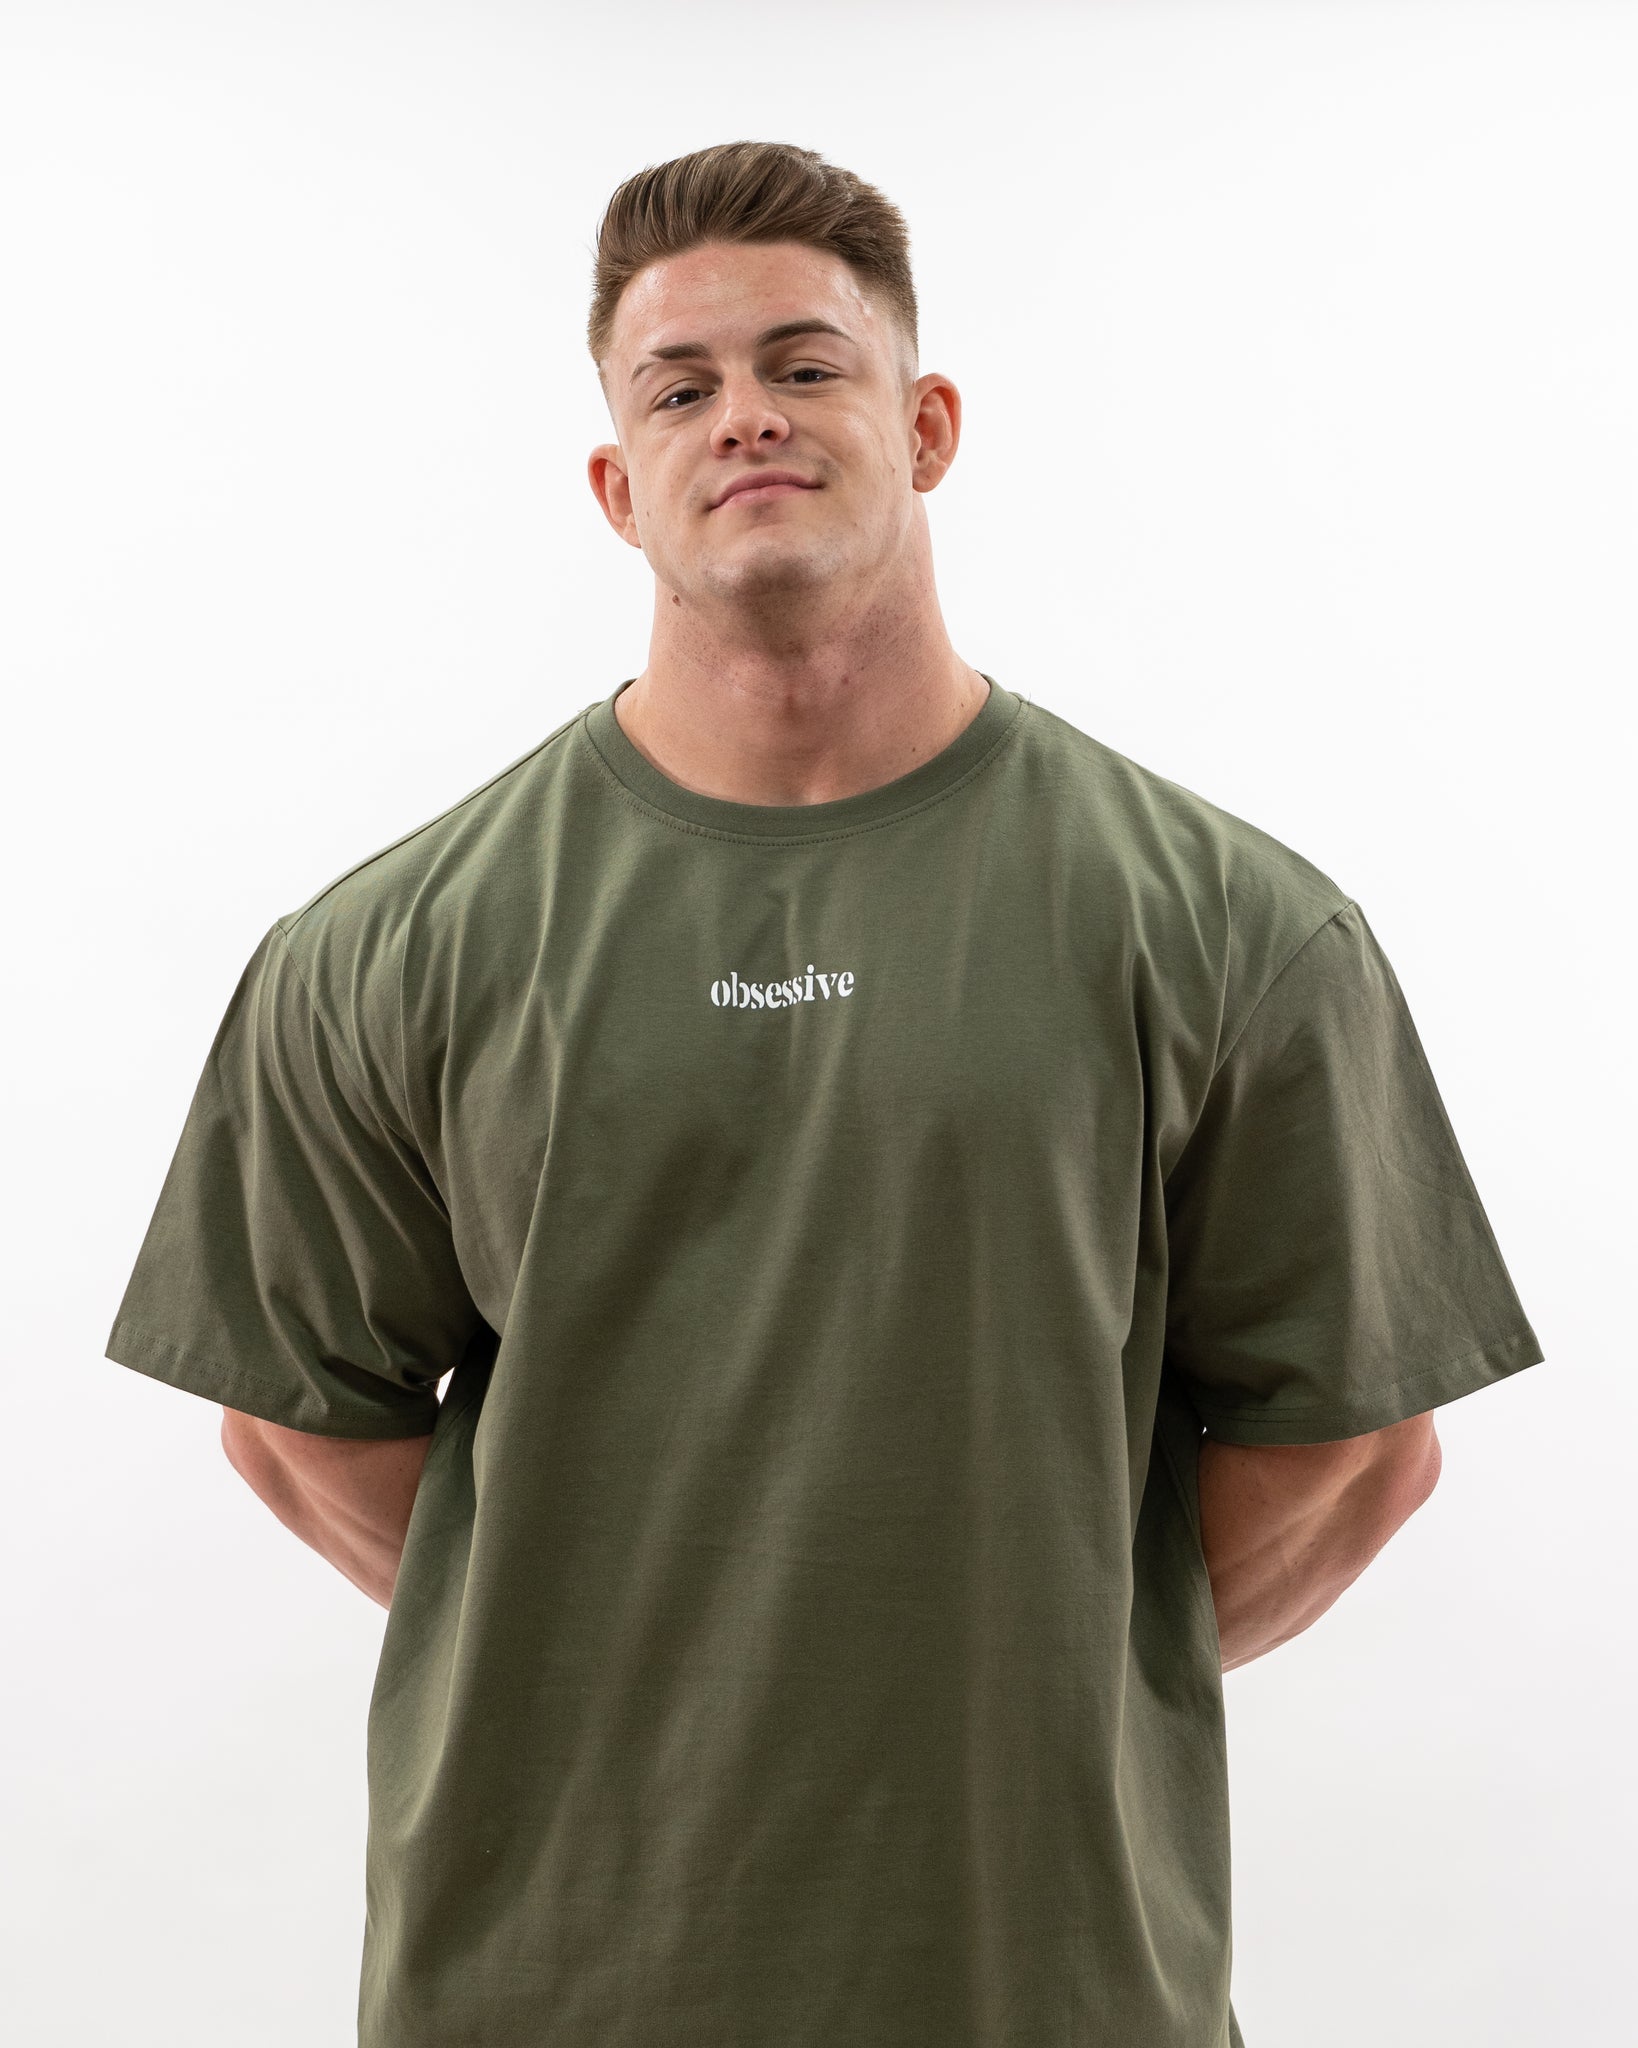 Obsessive Oversize T-shirt - Military Green